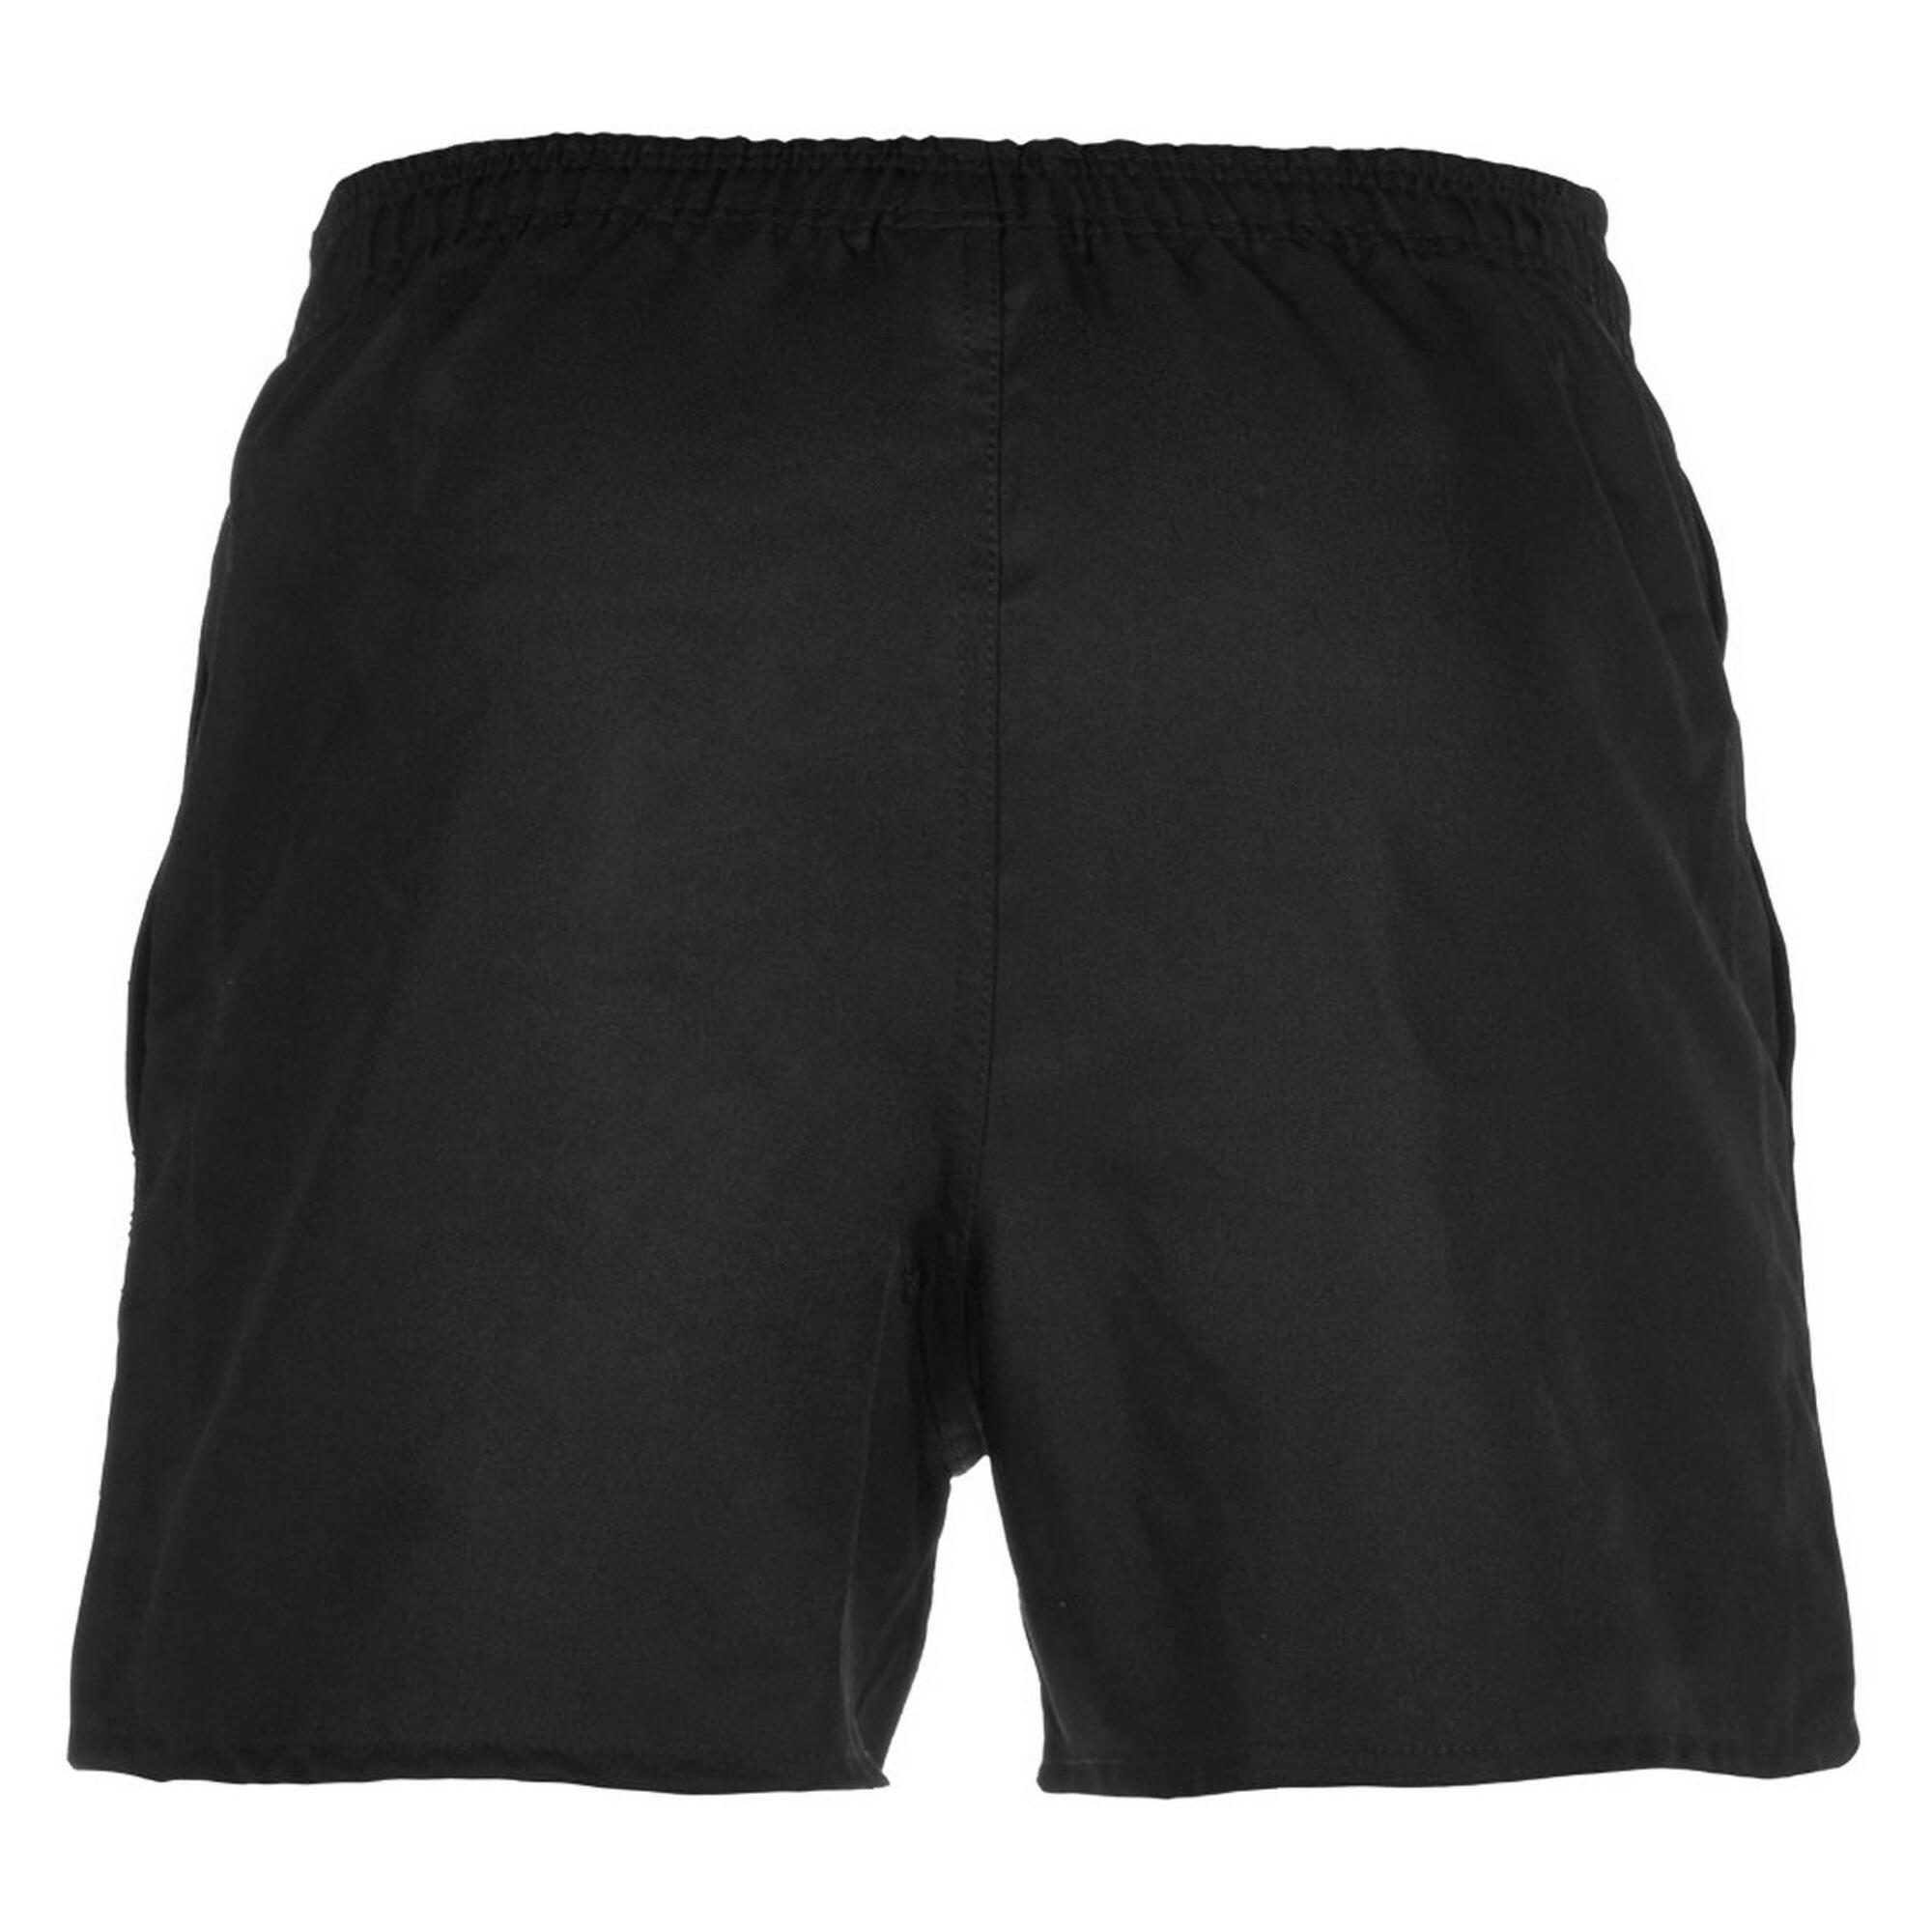 Mens Professional Elasticated Sports Shorts (Black) 2/3